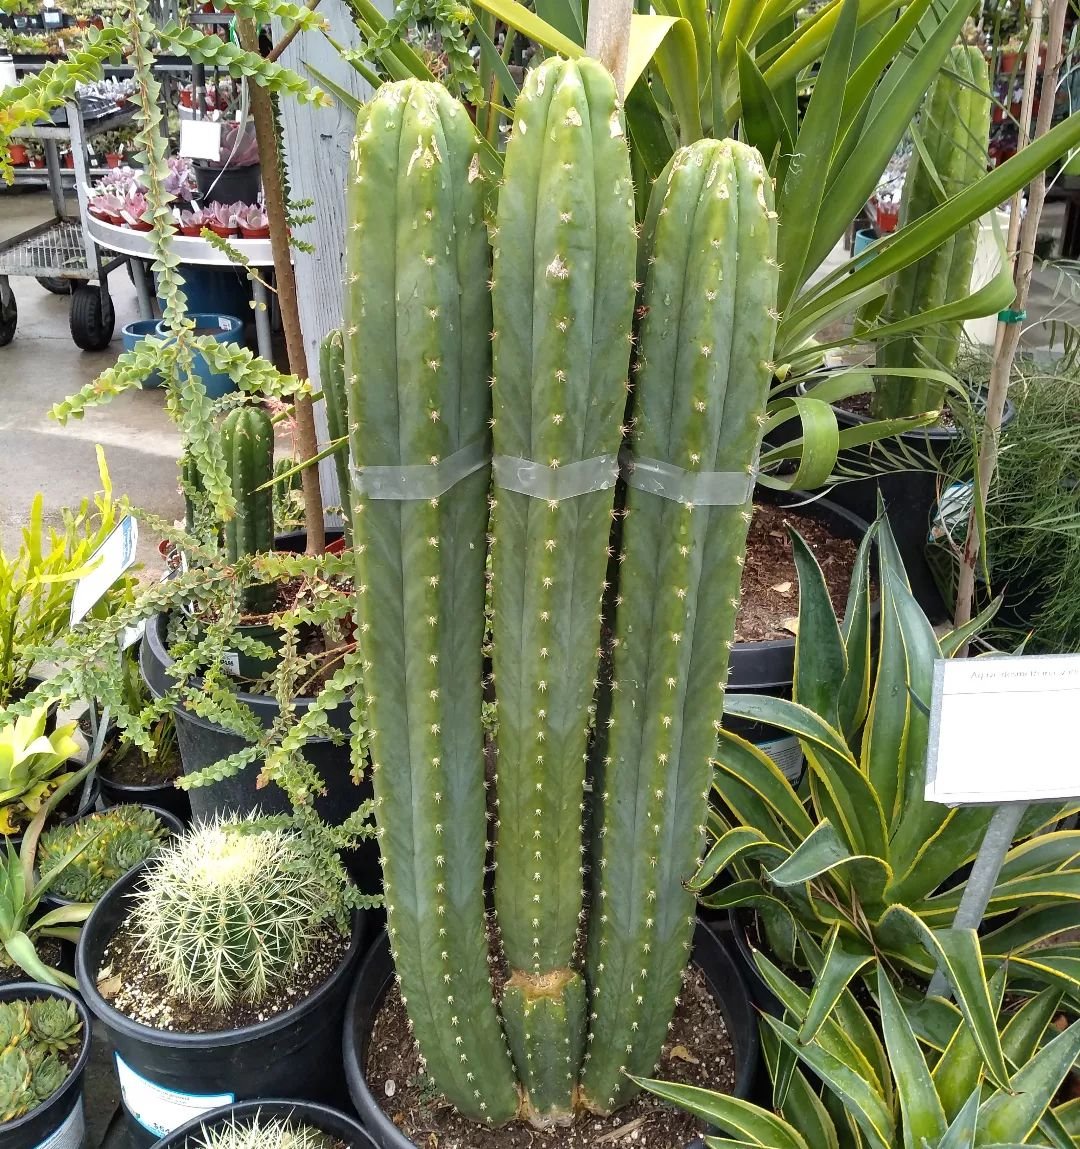 Great Caesars Ghost.  This San Pedro Cactus is pretty Super.  #echinopsispachanoi #sanpedrocactus #DroughtTolerant #BayAreaGardening #backyardoasis #DroughtTolerantLandscape #lowwaterplants #greatcaesarsghost